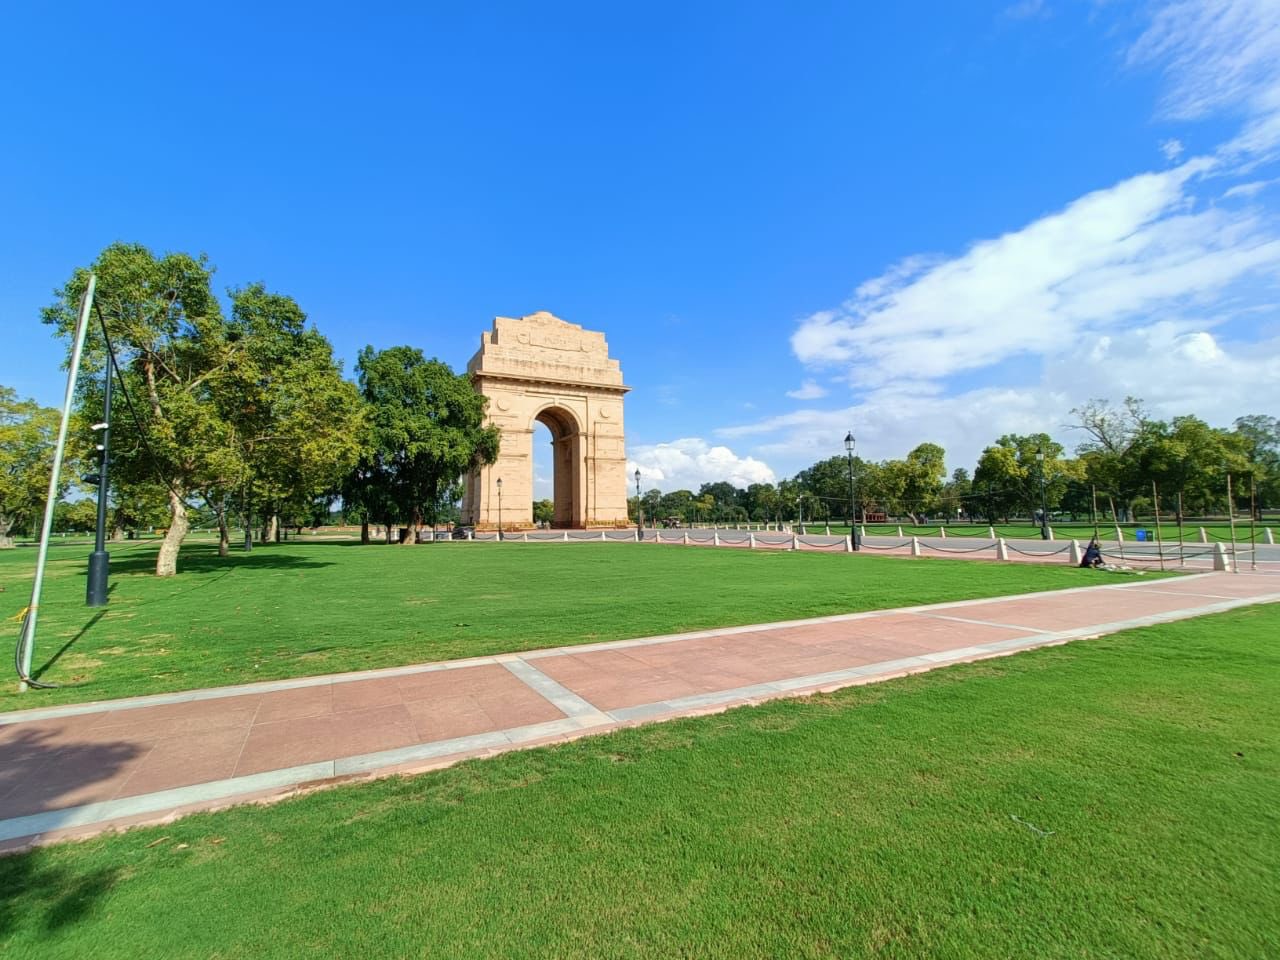 PM Modi to inaugurate 'Kartavya Path' and unveil the statue of Netaji Subhas Chandra Bose at India Gate